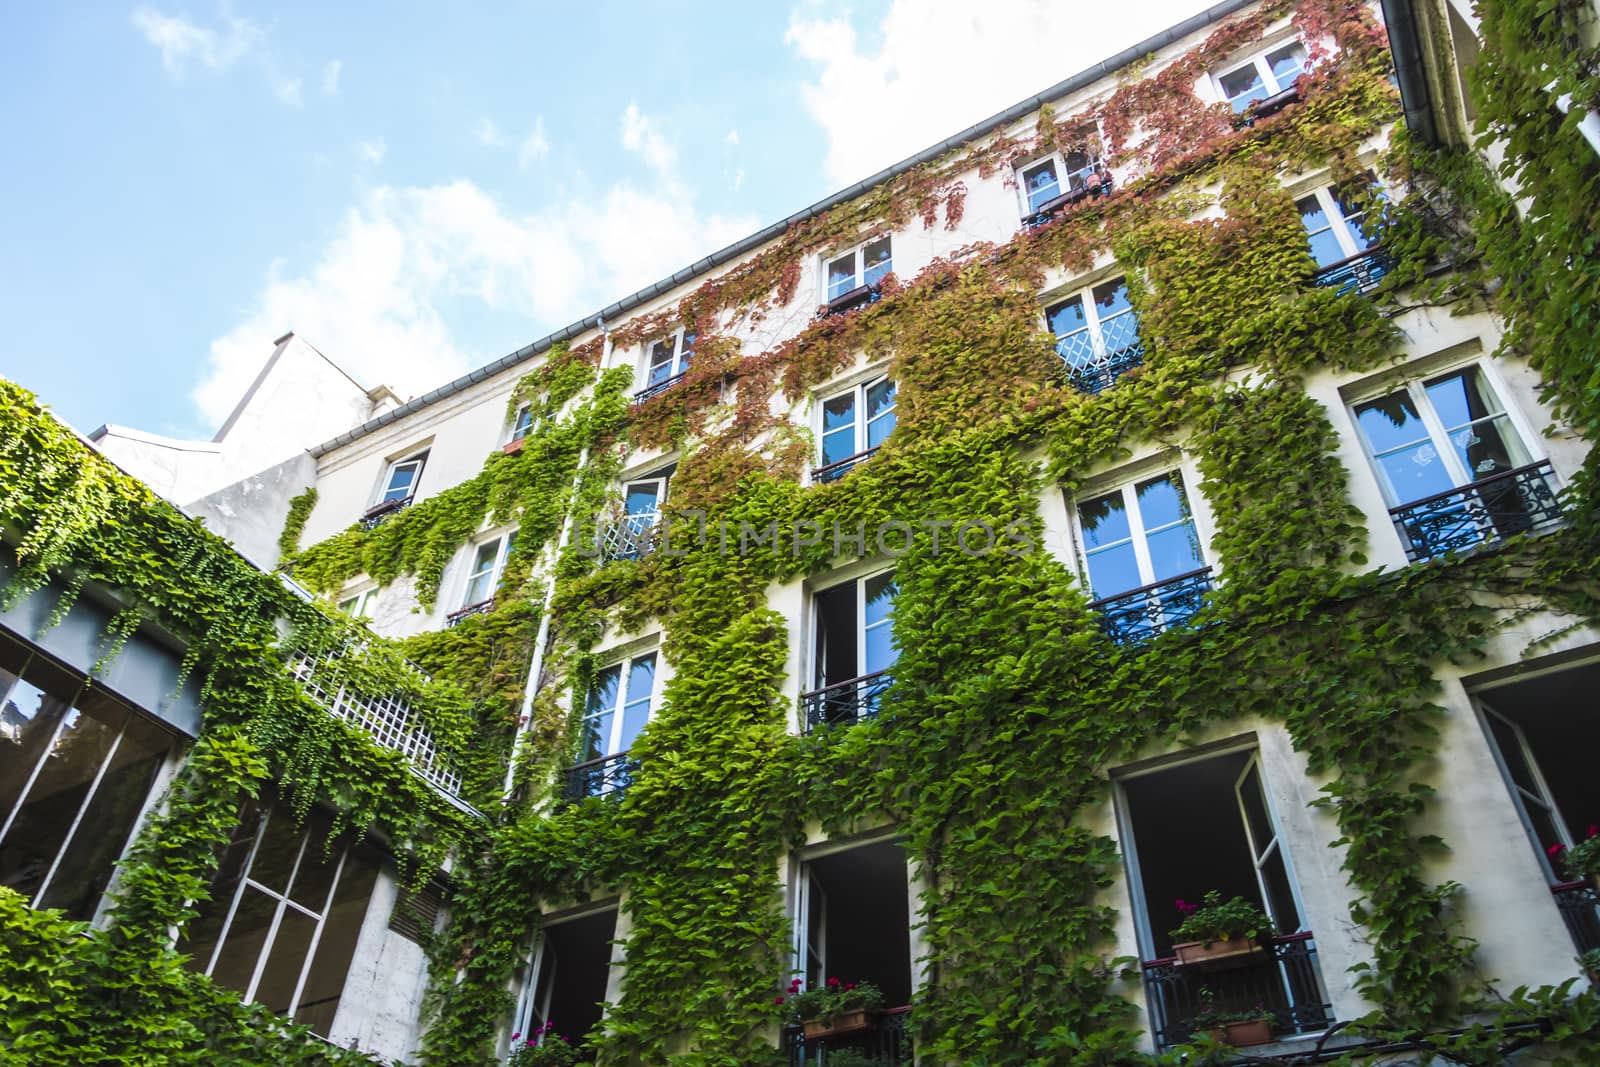 Courtyard, Paris, France. Ivy vine climbing on building wall